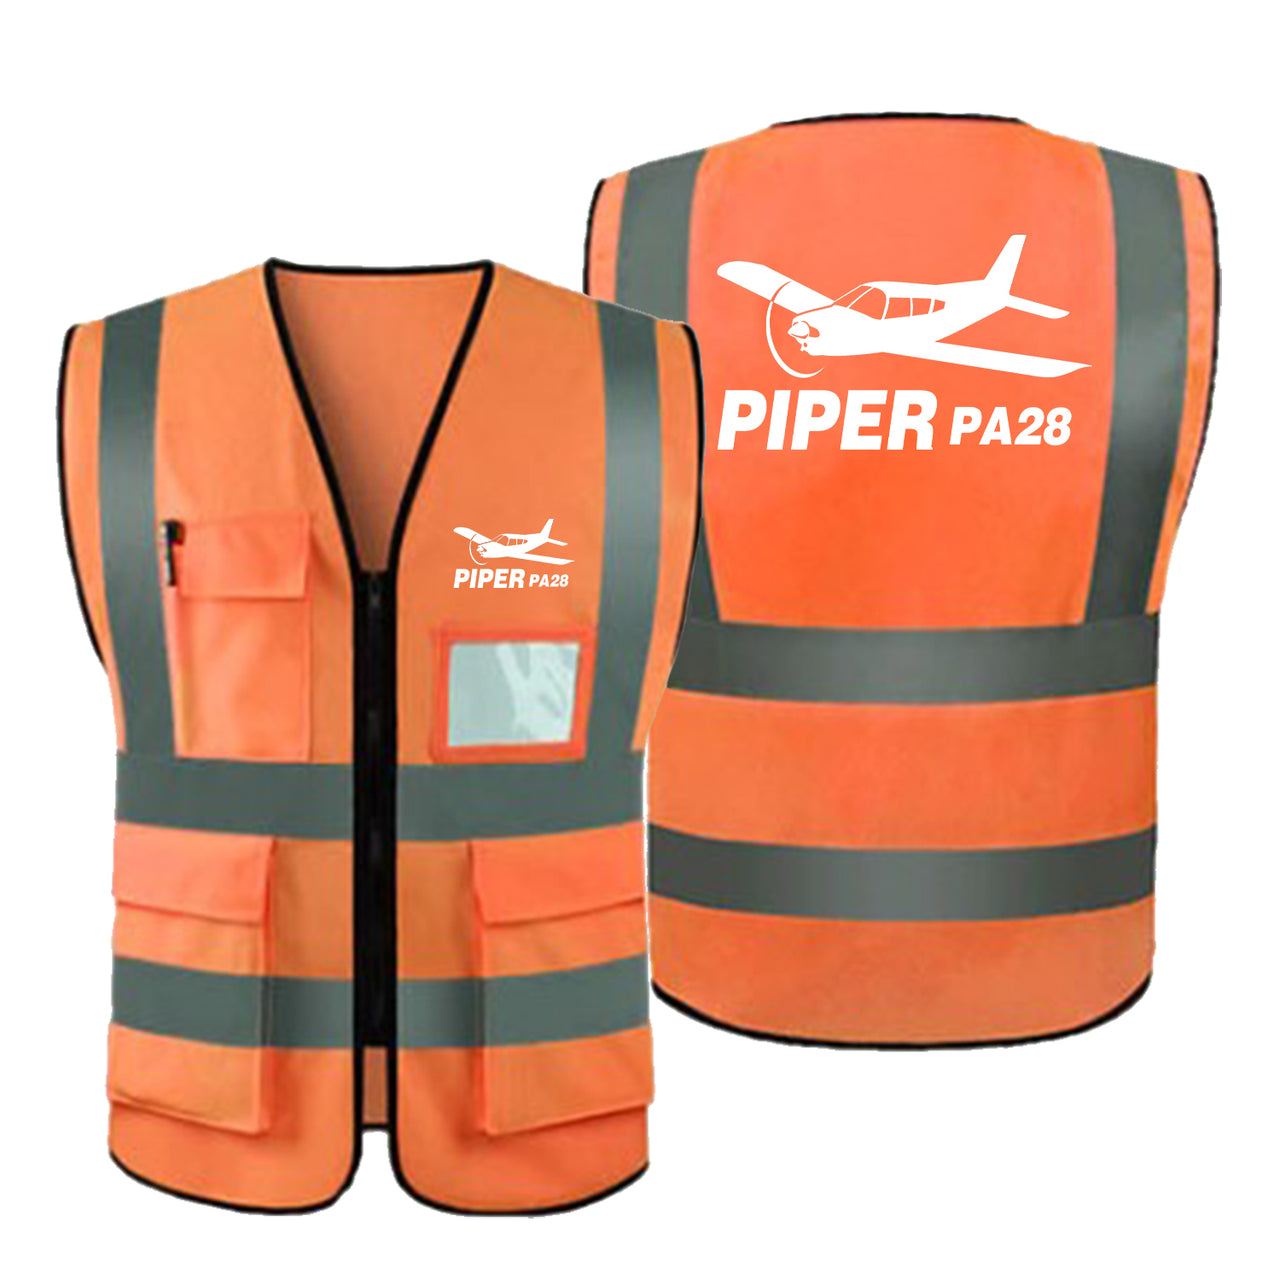 The Piper PA28 Designed Reflective Vests